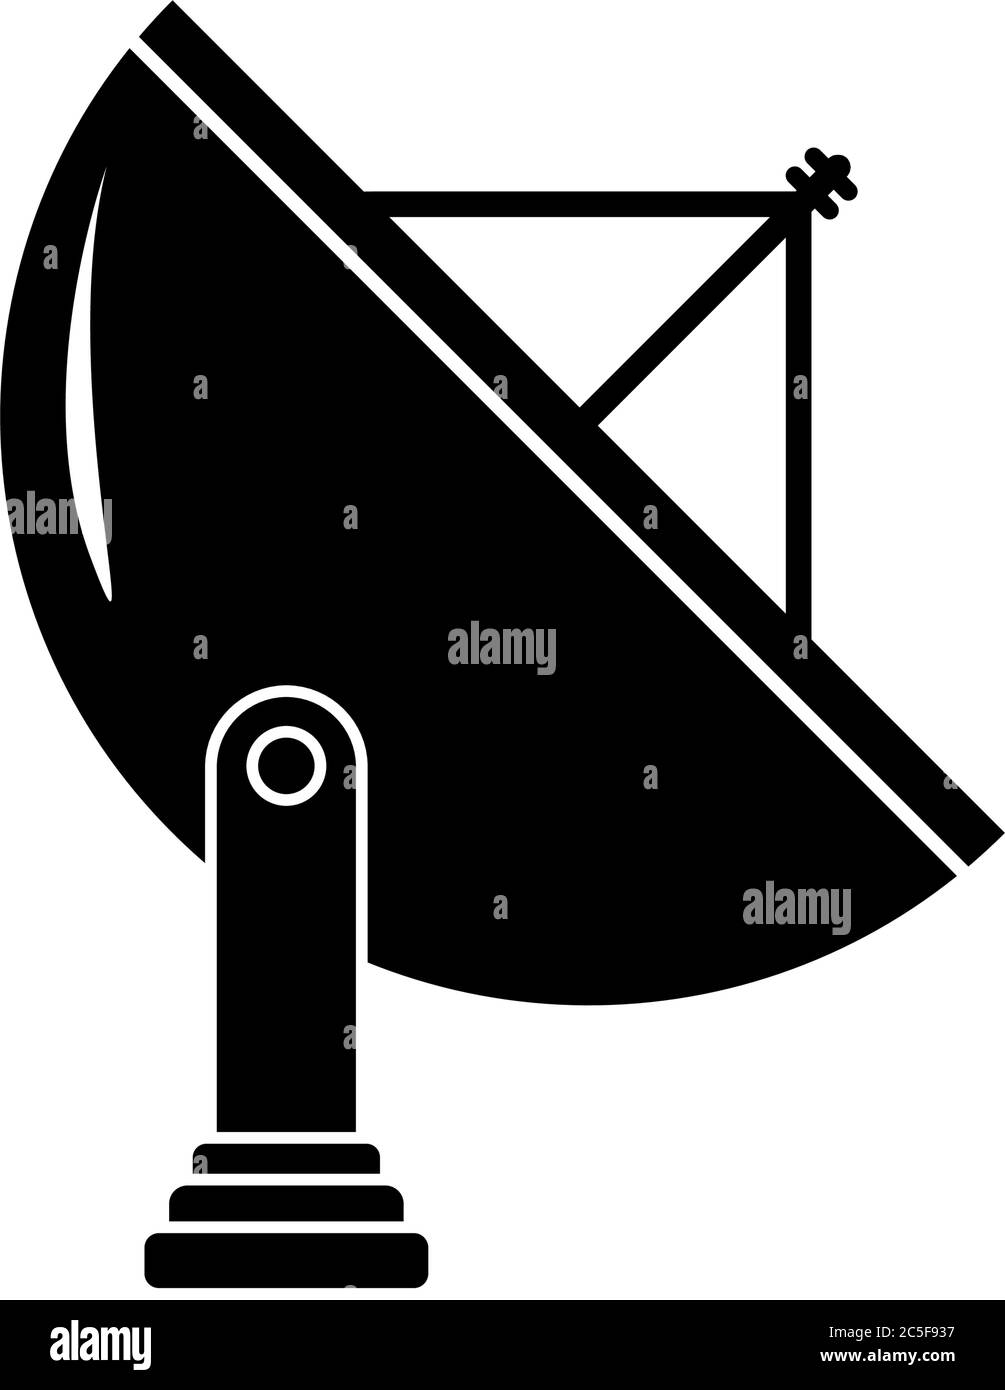 Satellite dish icon black communication broadcasting system technology symbol isolated on white background Stock Vector